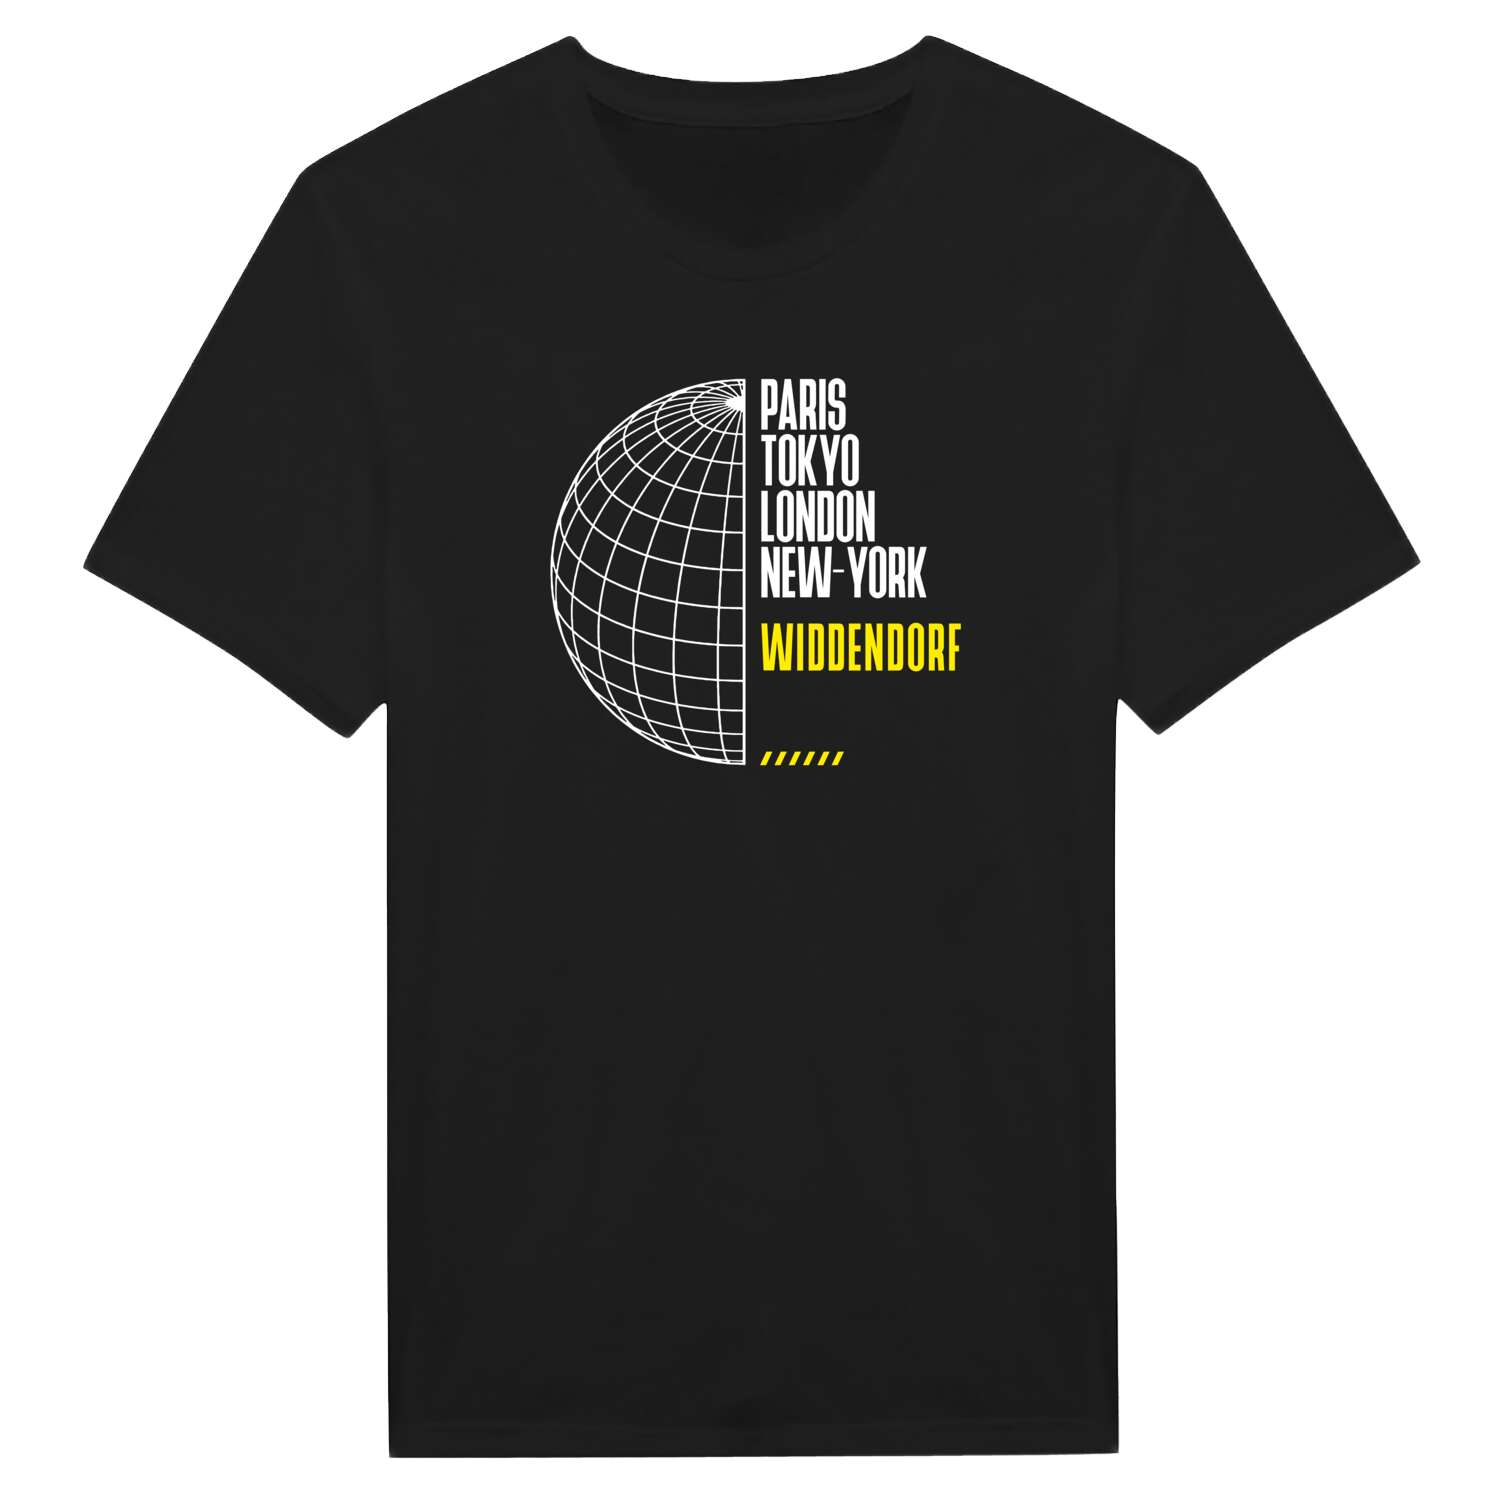 Widdendorf T-Shirt »Paris Tokyo London«